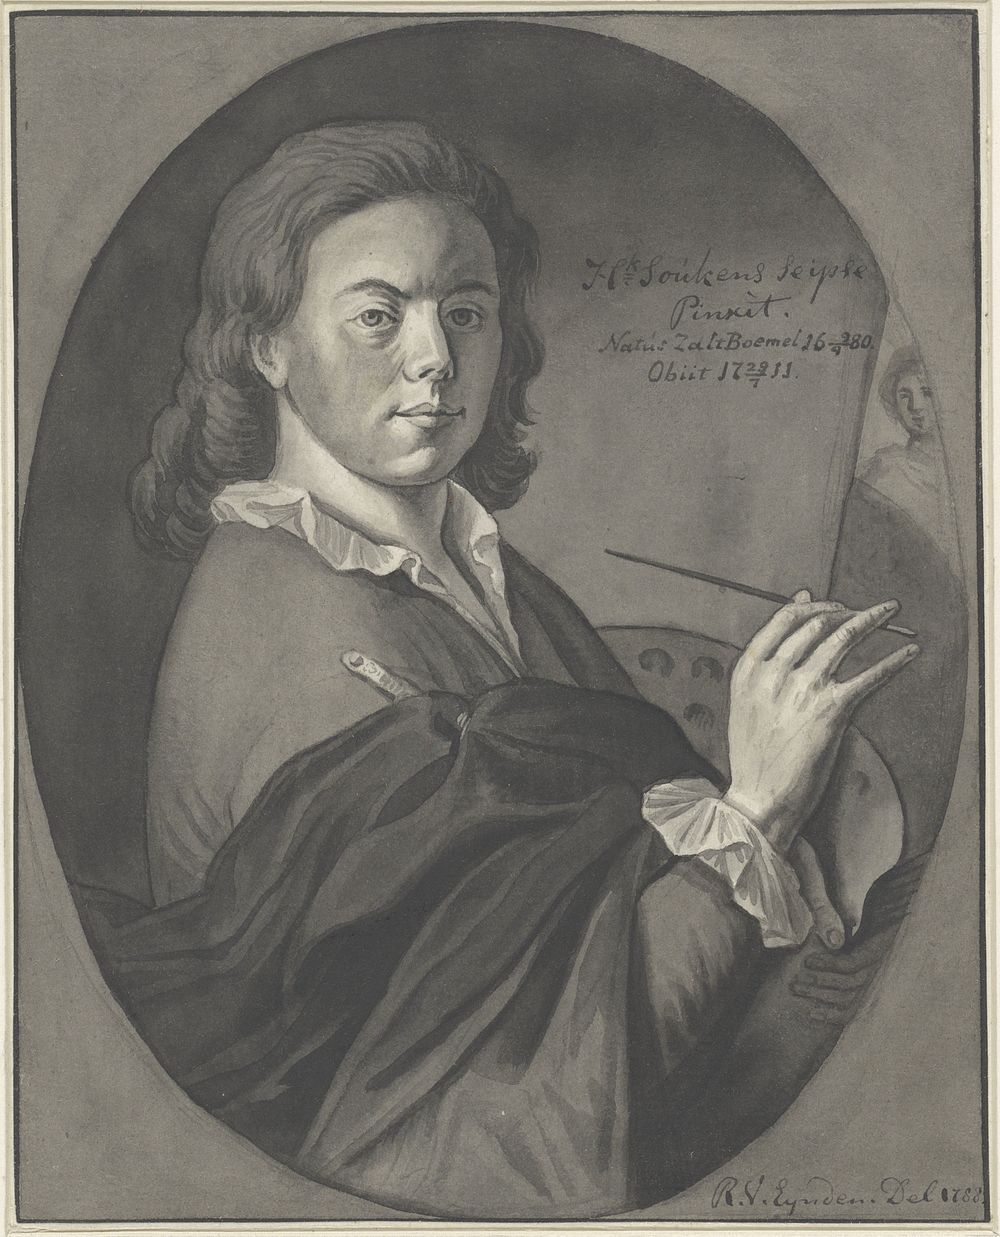 Portret van Hendrik Soukens (1788) by Roeland van Eynden and Hendrik Soukens